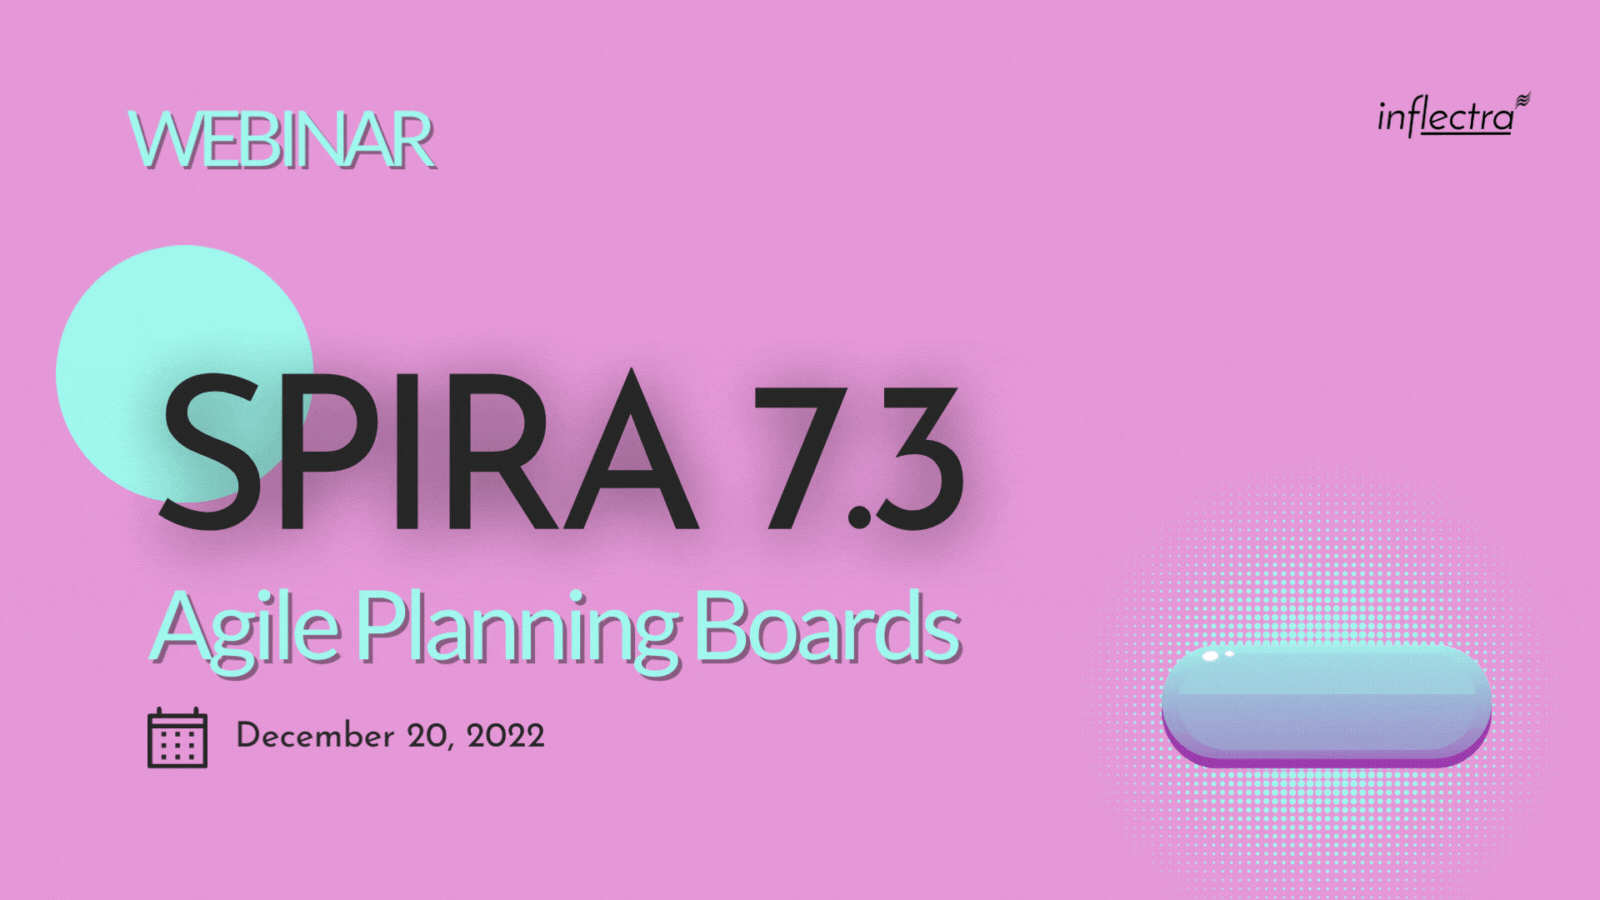 spira-agile-planning-board-webinar-december-twentieth-pink-background-blue-black-text-image